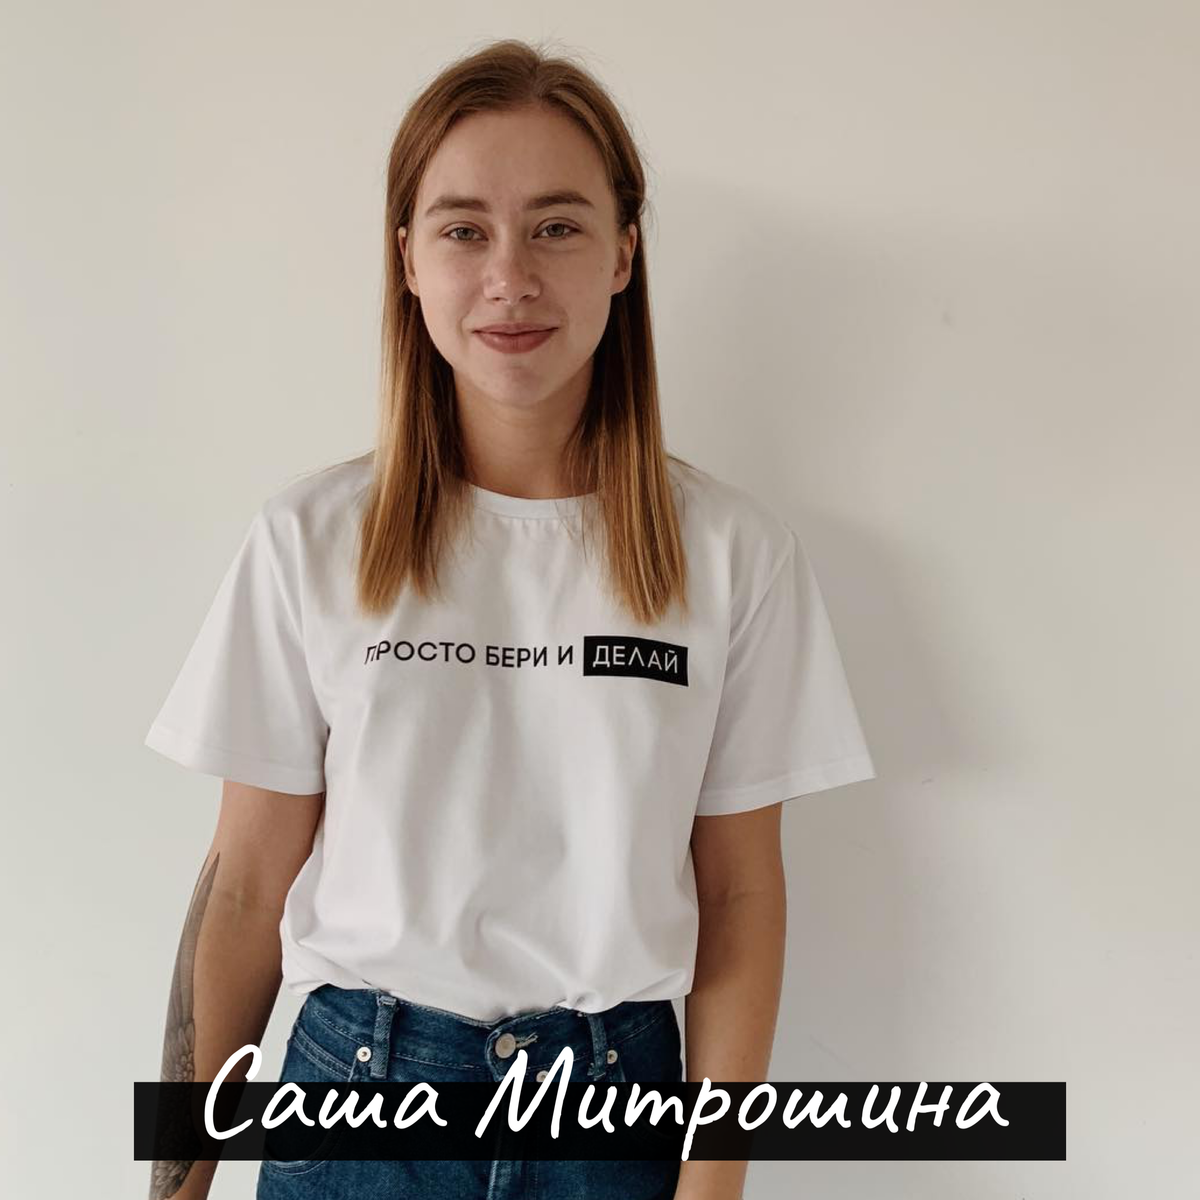 Александра митрошина: биография, личная жизнь, родители, кто ее отец